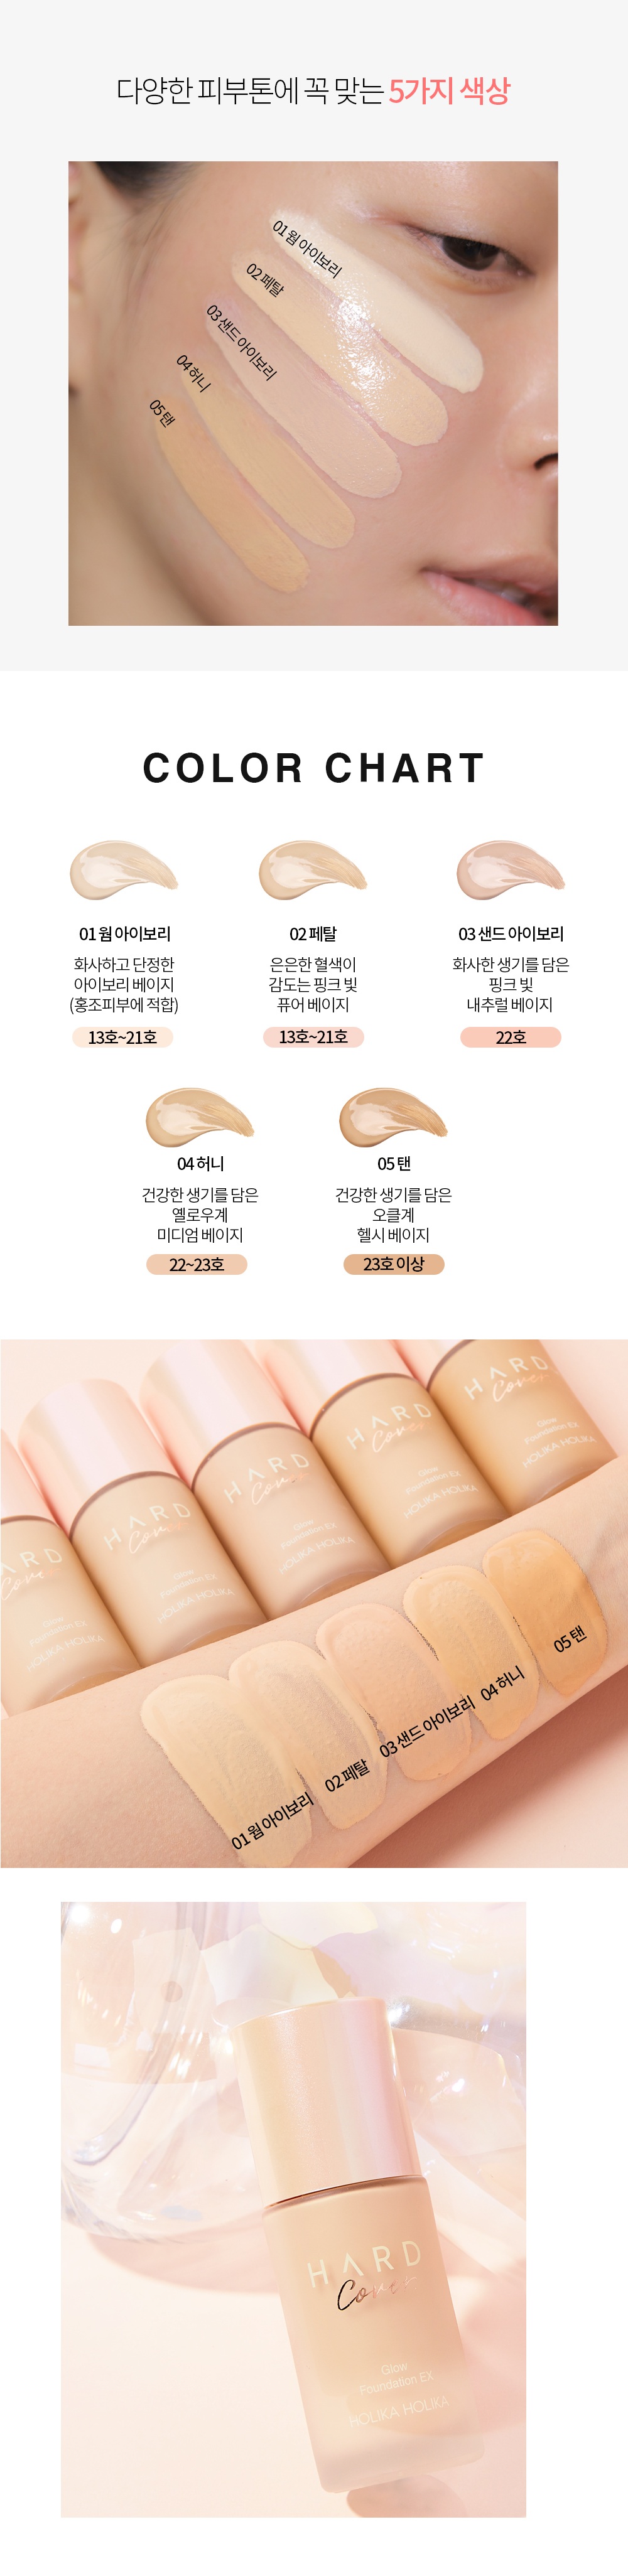 Holika Holika Hard Cover Glow Foundation EX korean cosmetic makeup product online shop malaysia China indonesia4